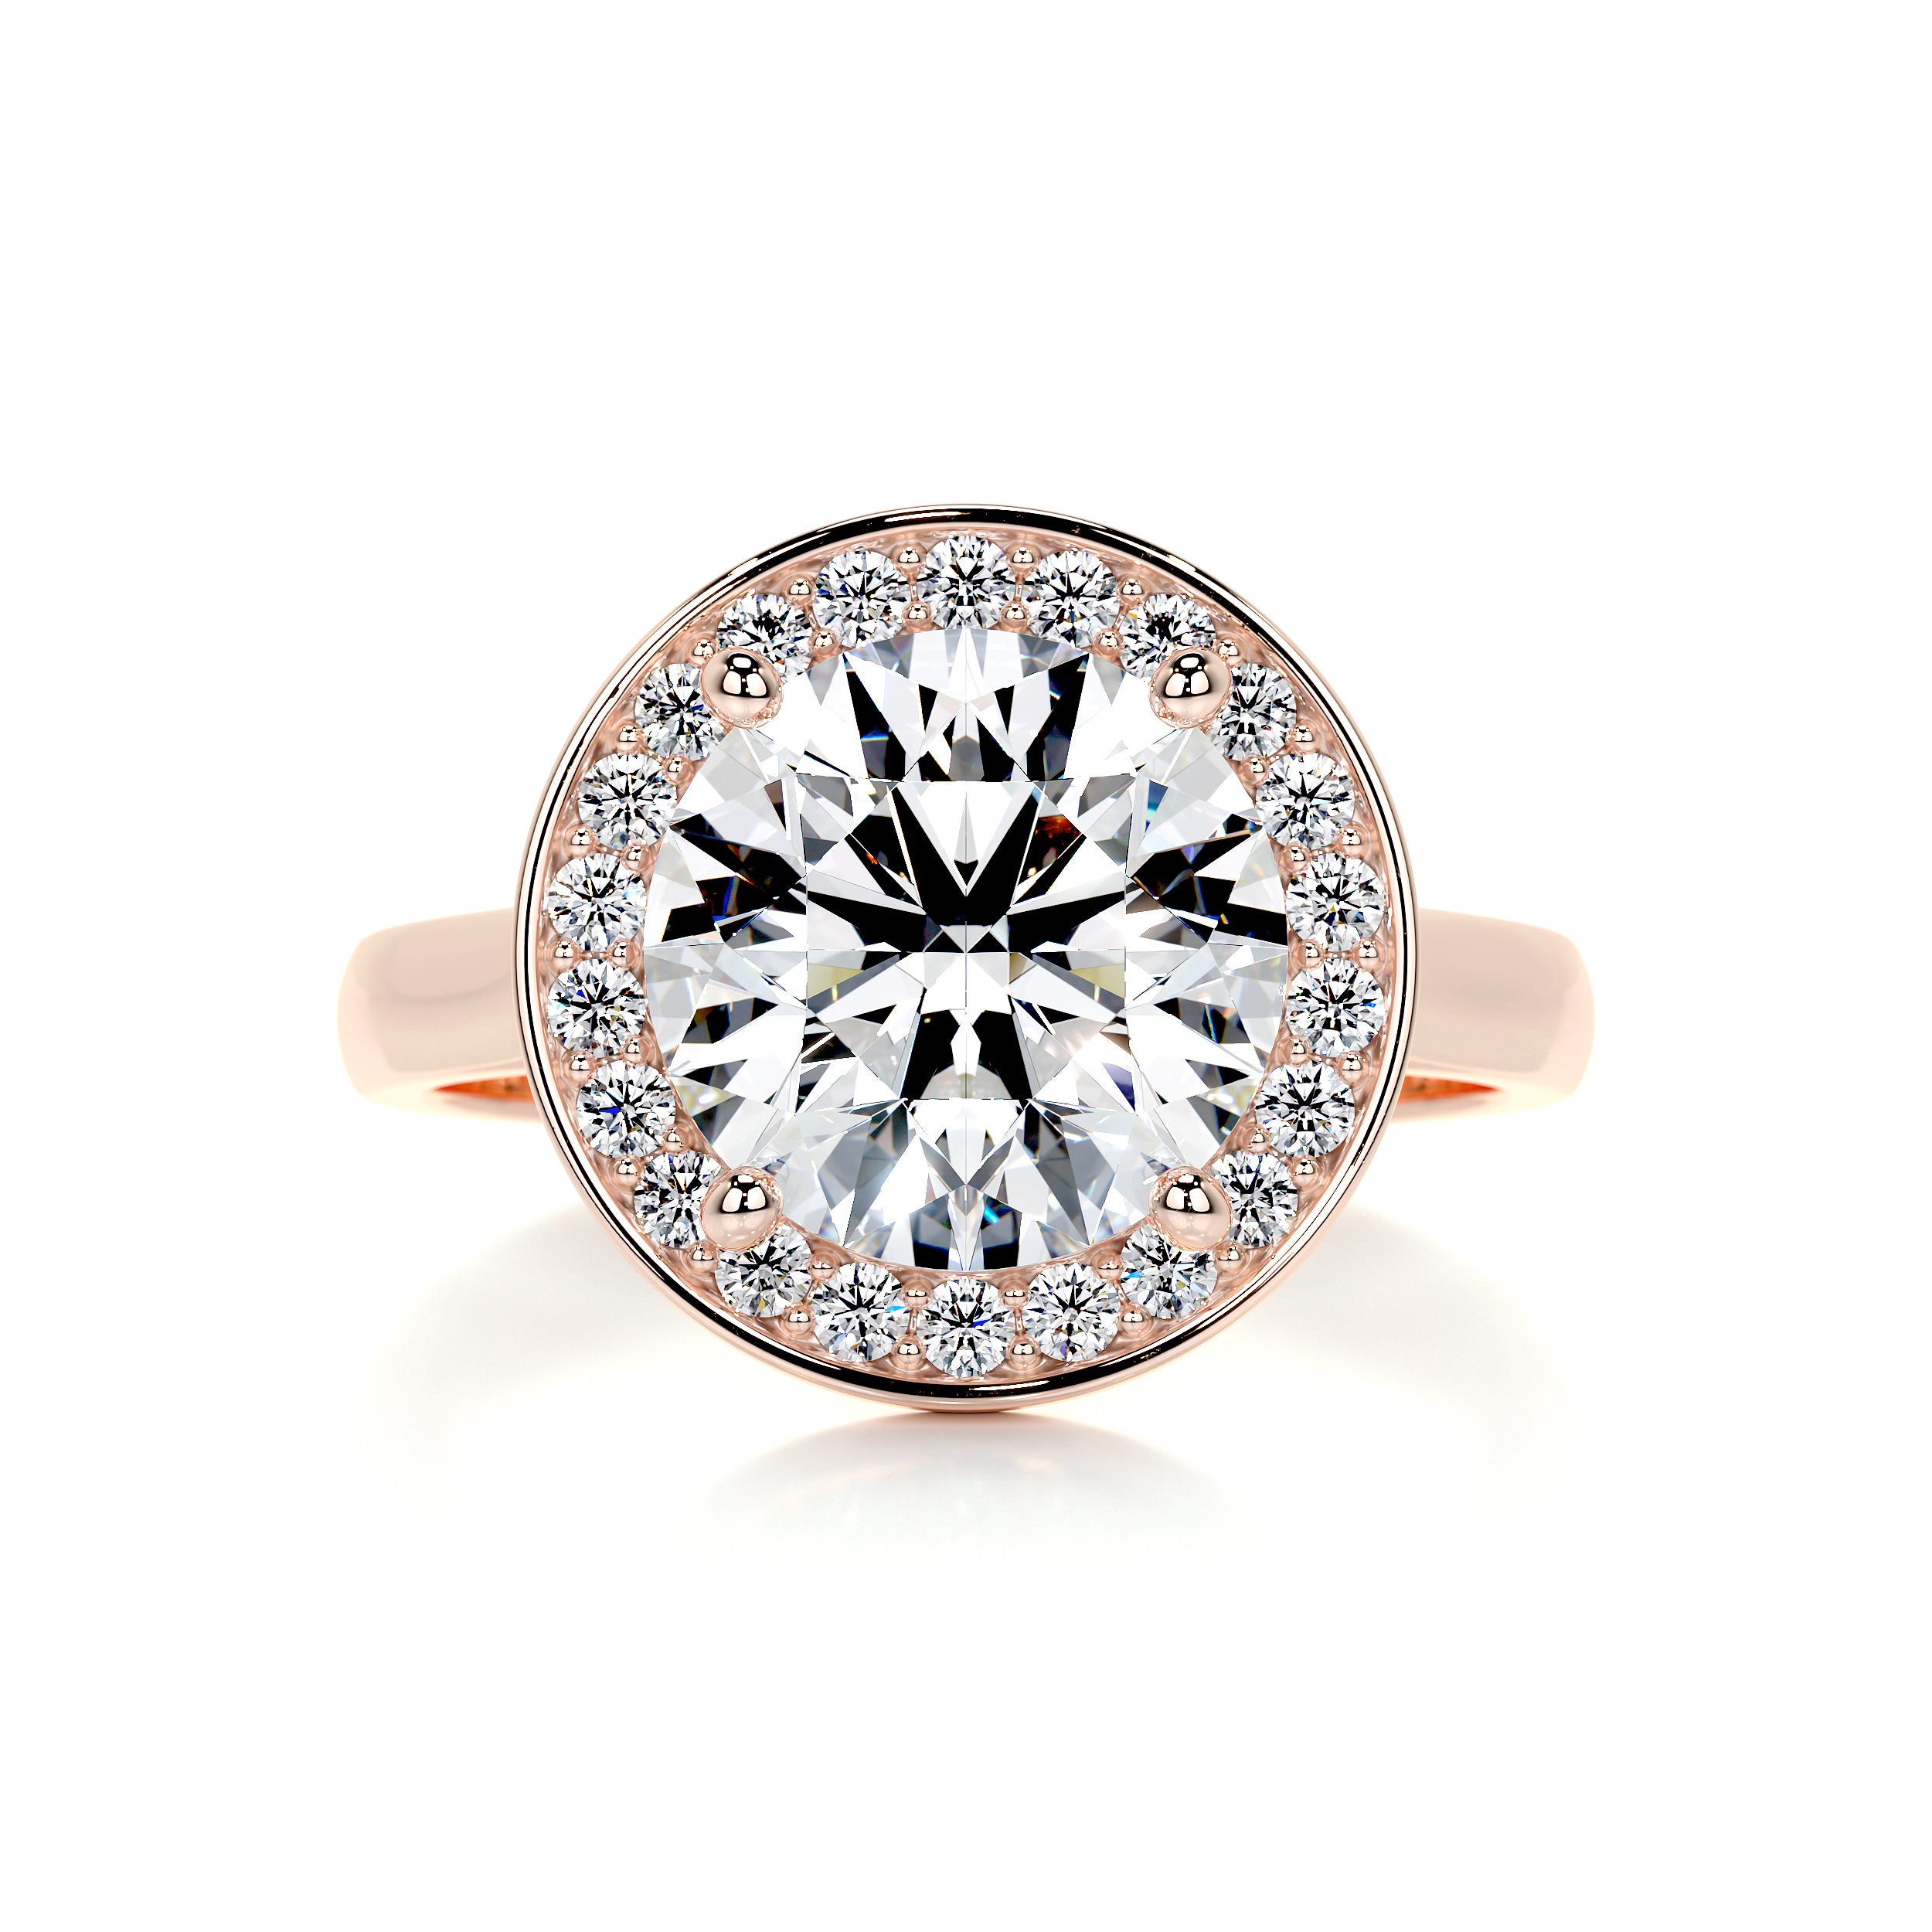 Charlie Diamond Engagement Ring   (2.75 Carat) -14K Rose Gold